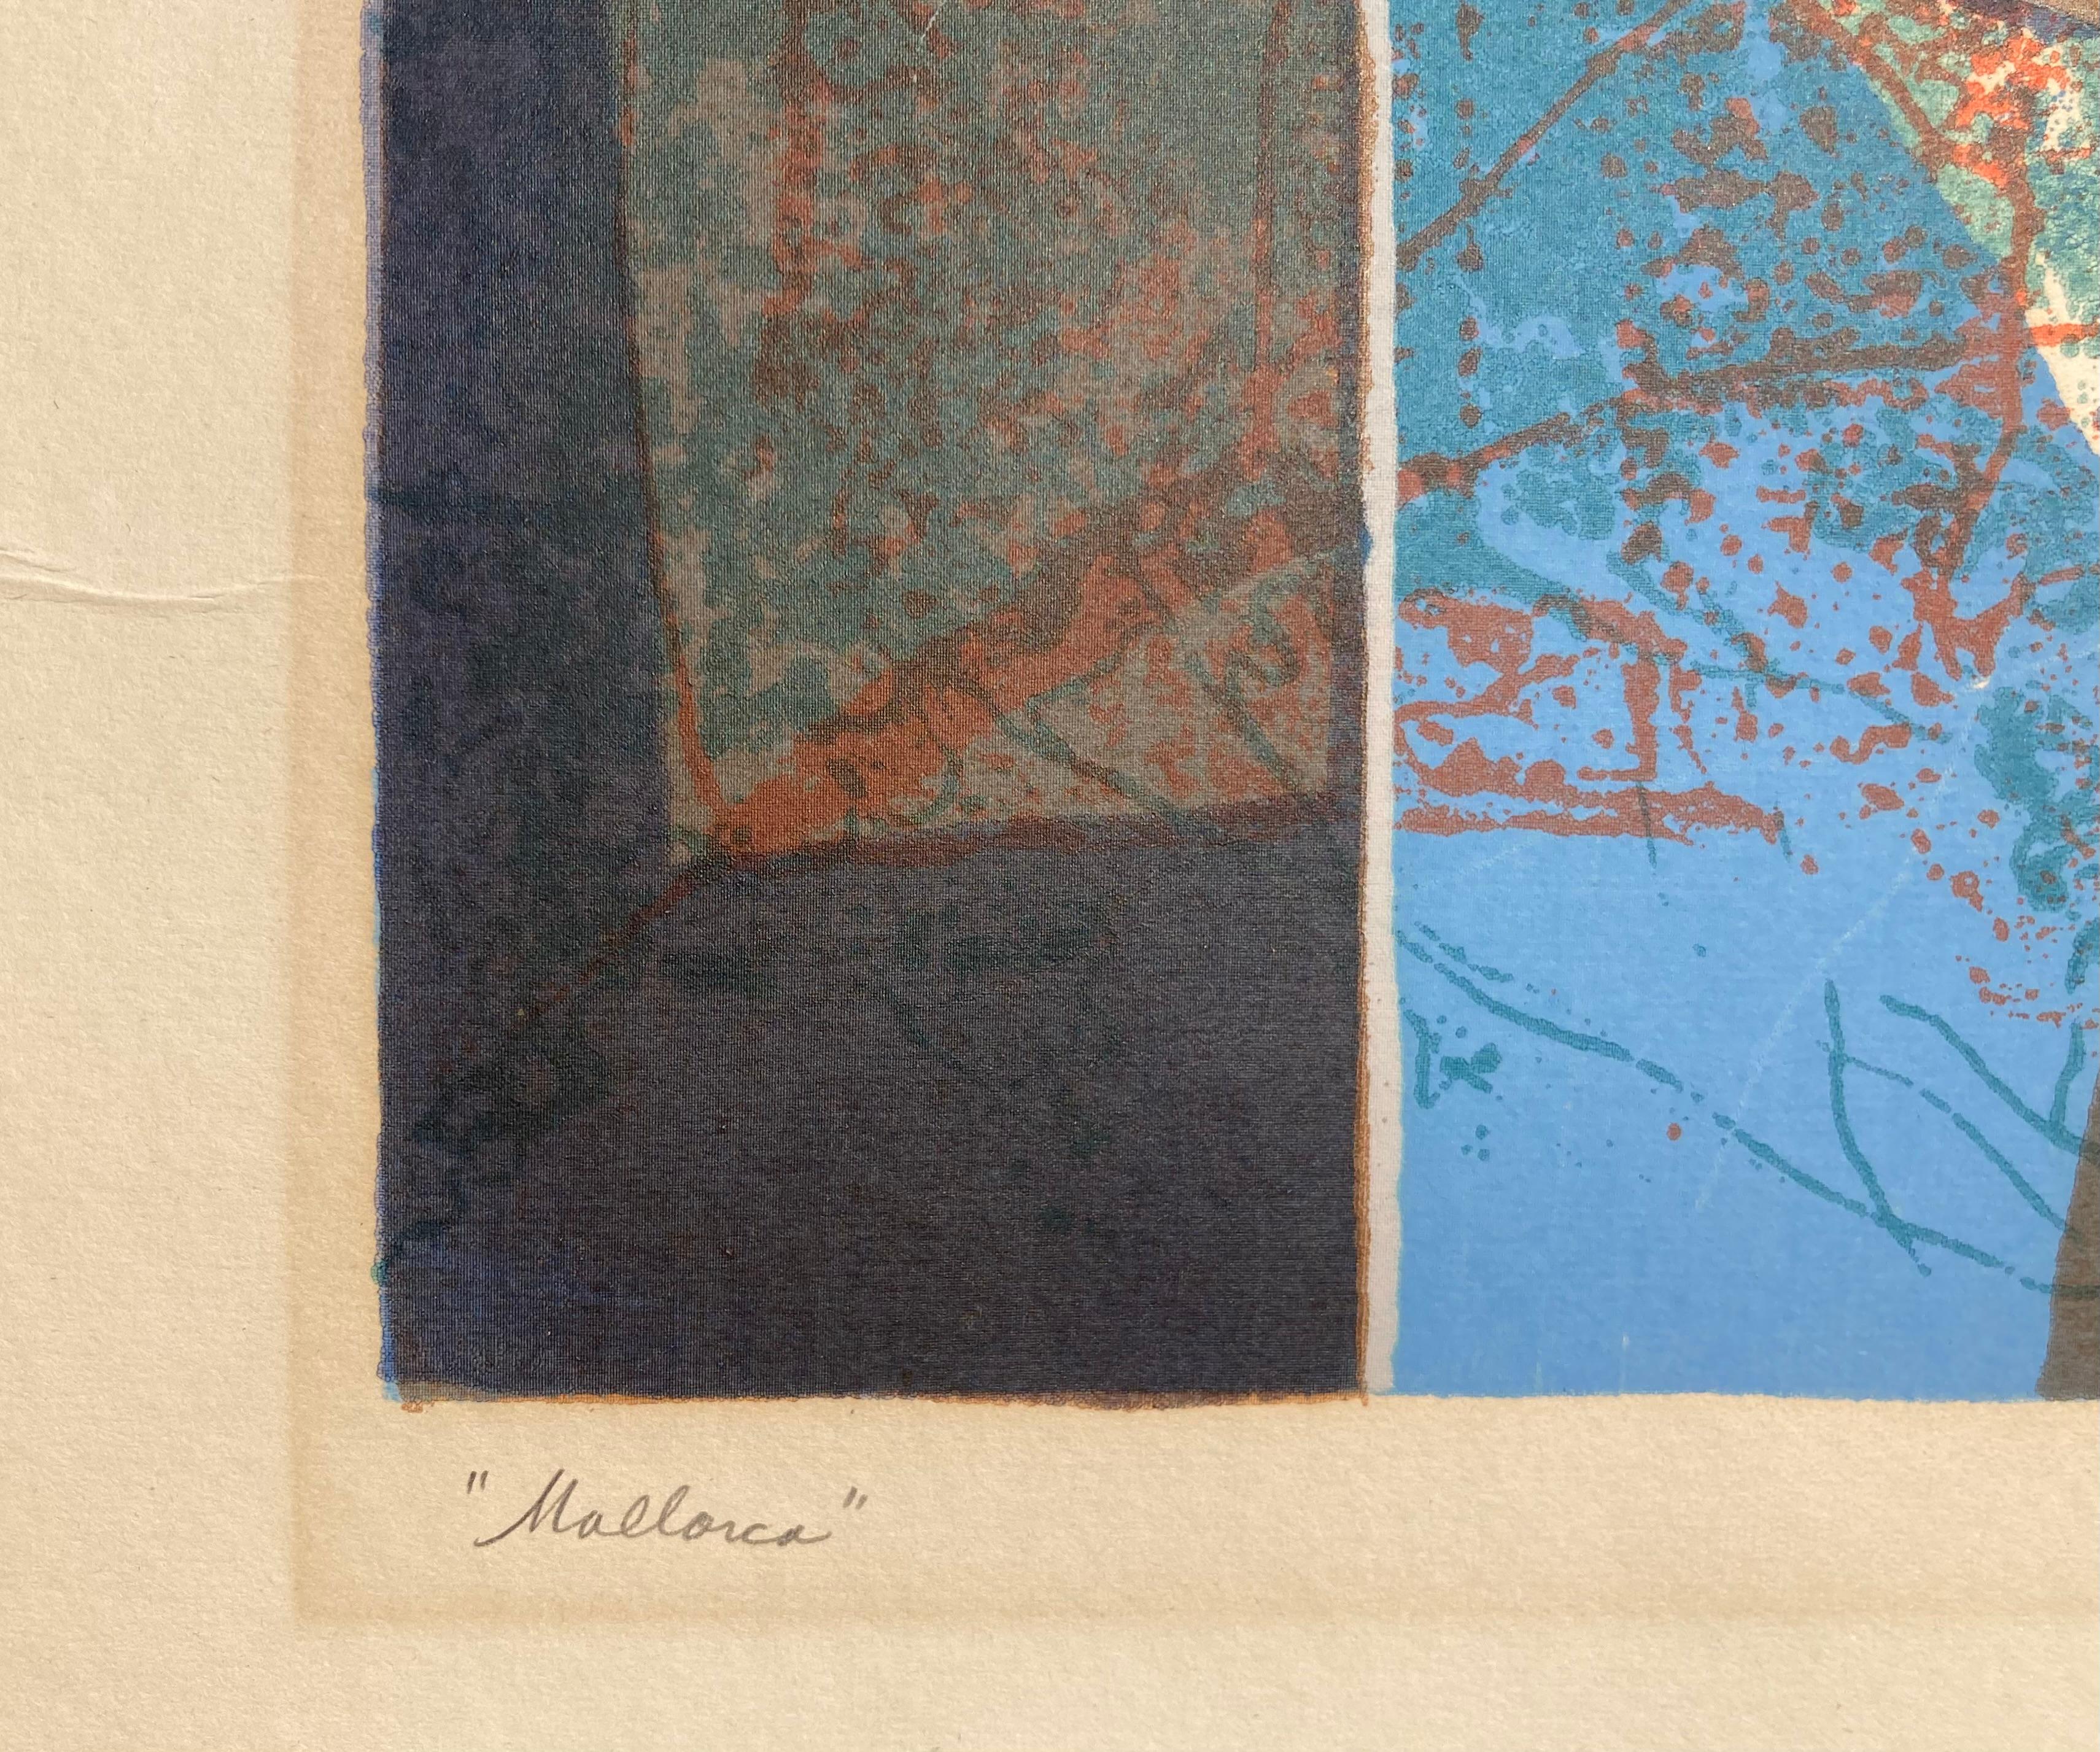 MALLORCA (Grau), Abstract Print, von Dorr Bothwell